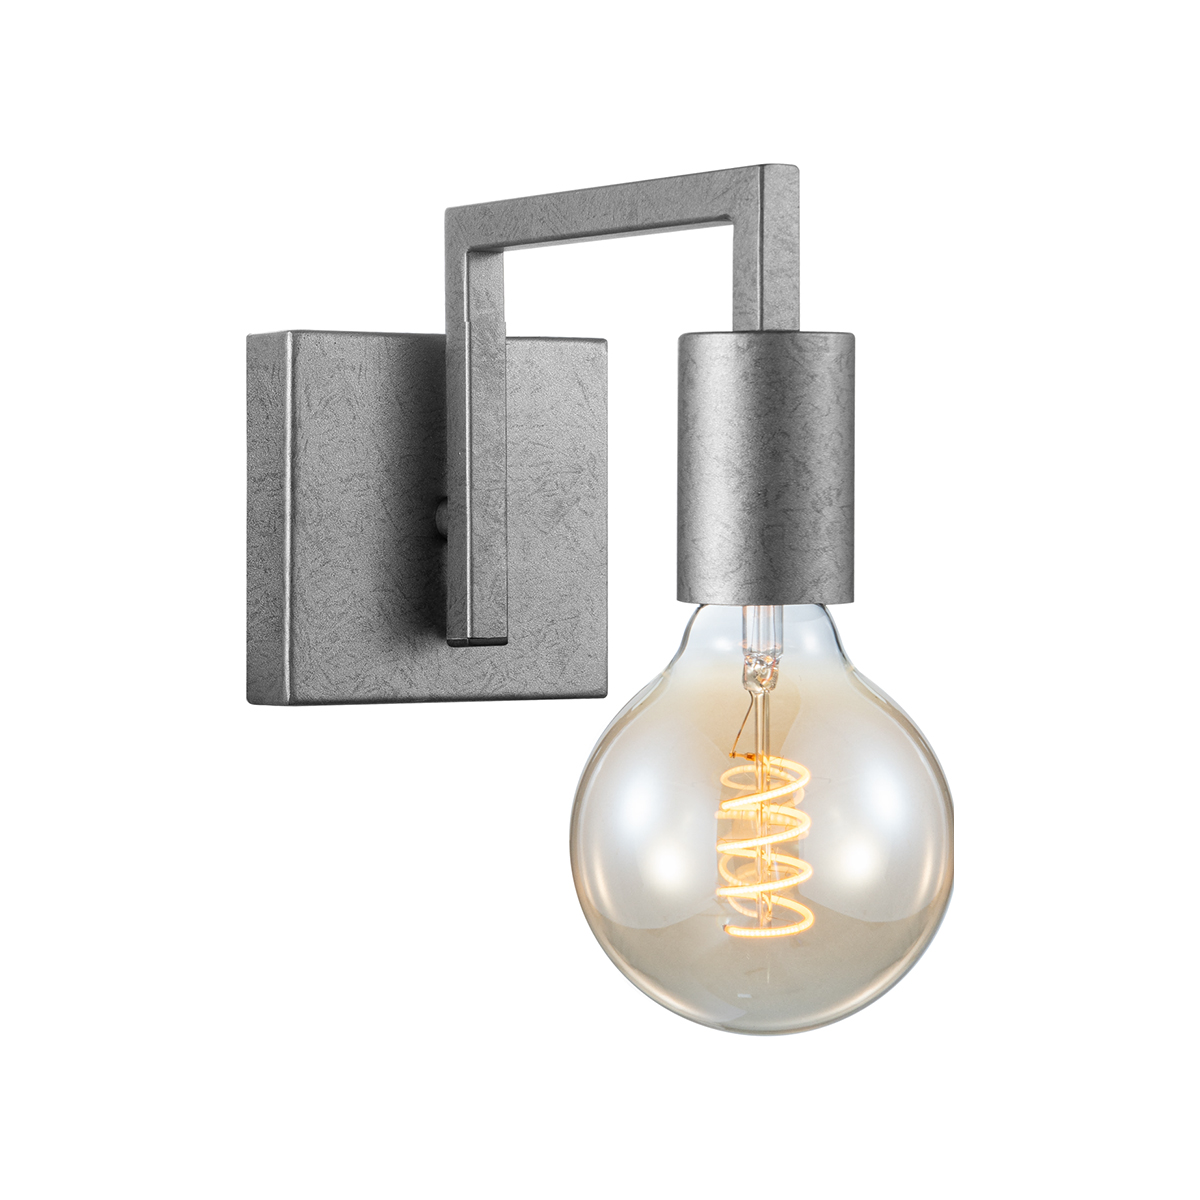 Tangla lighting - TLW1028-02GM - LED wall lamp 1 Light - metal in burned metal - square - E27